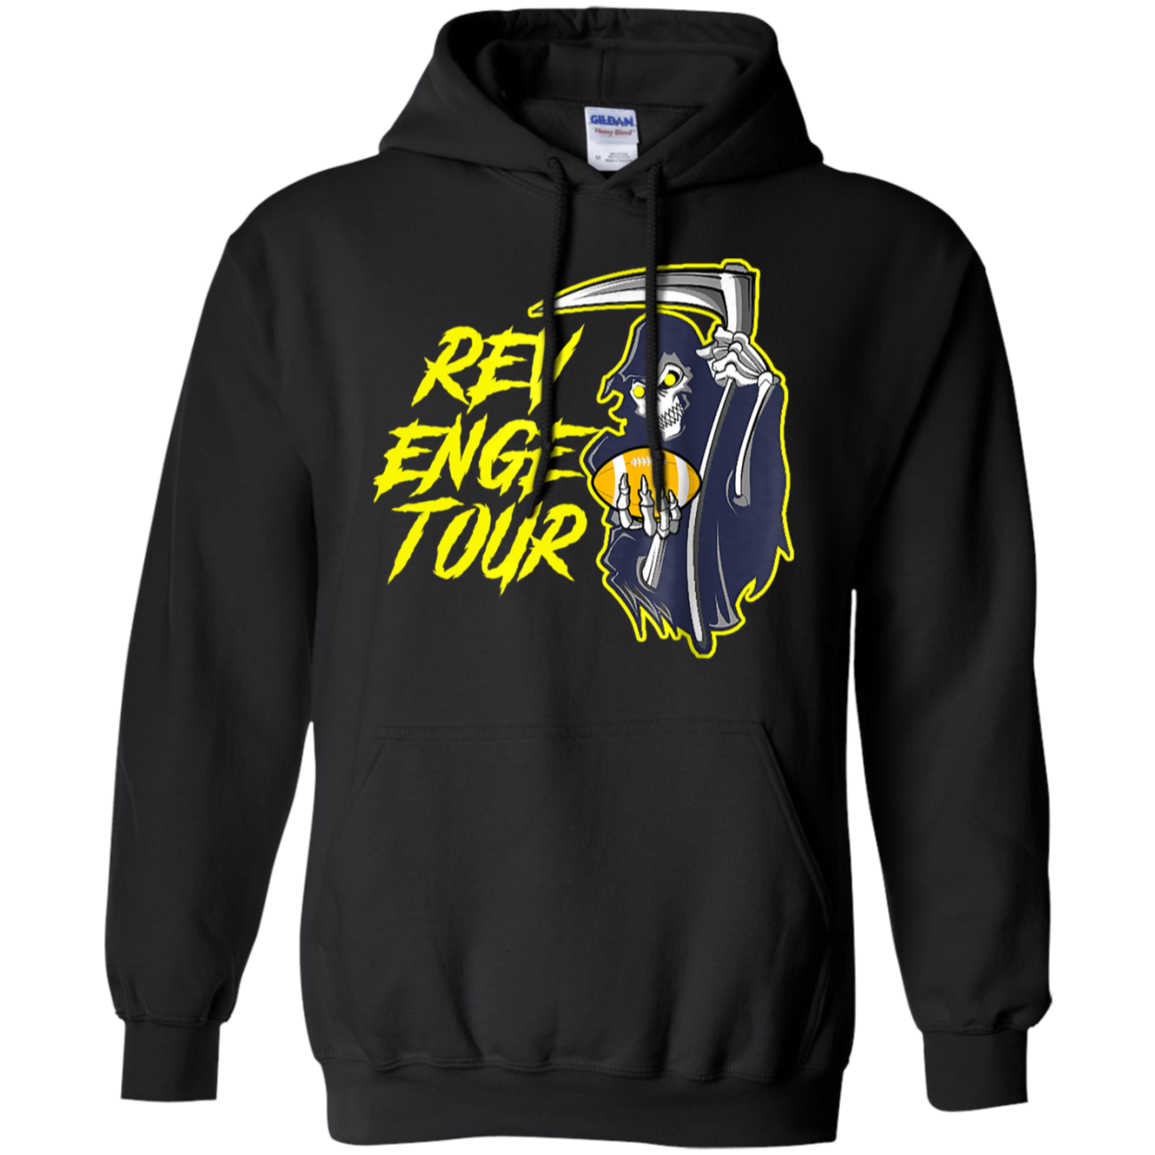 Michigan Revenge Tour 2018 Football Shirt 55